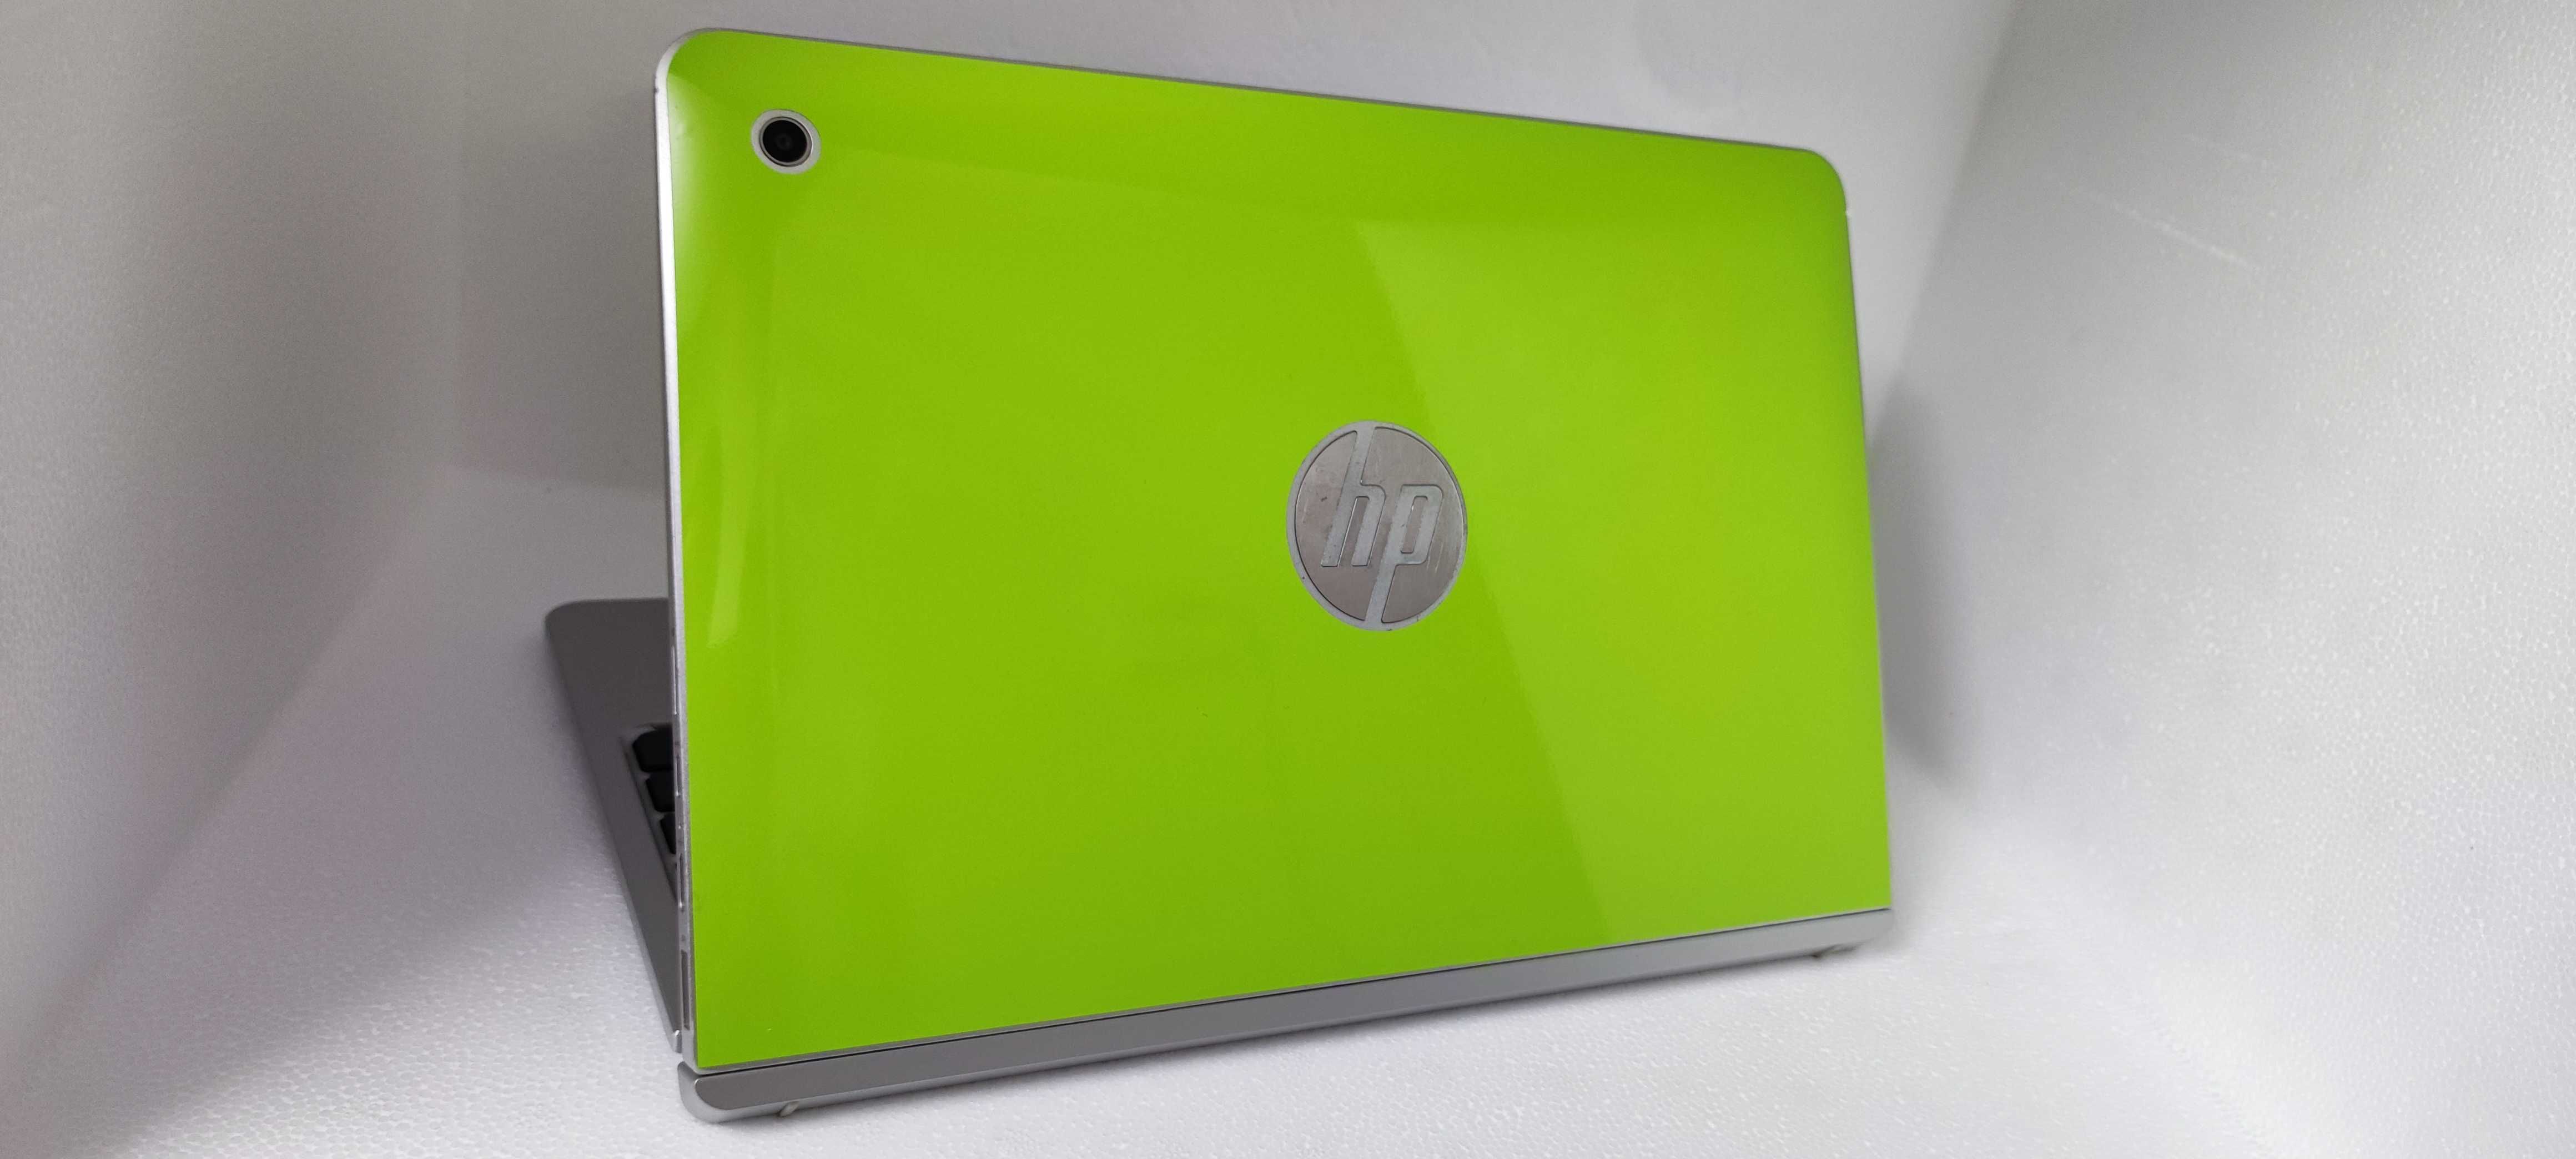 Tablet – Hybrid – HP X2 210 G2 (x5) 10.1″